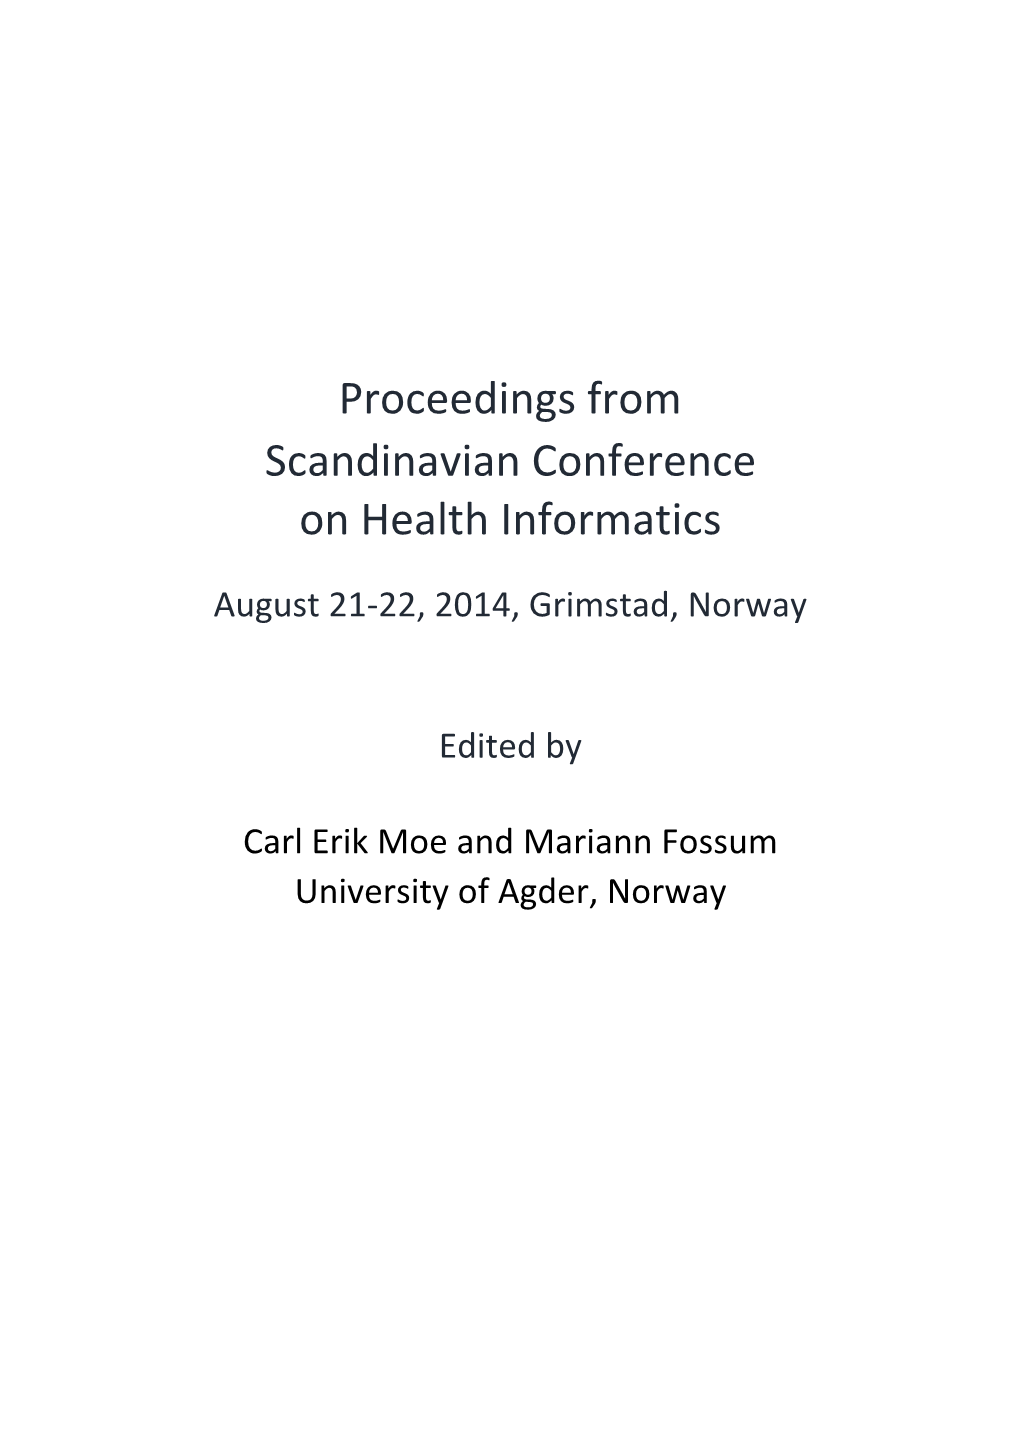 Proceedings from Scandinavian Conference on Health Informatics